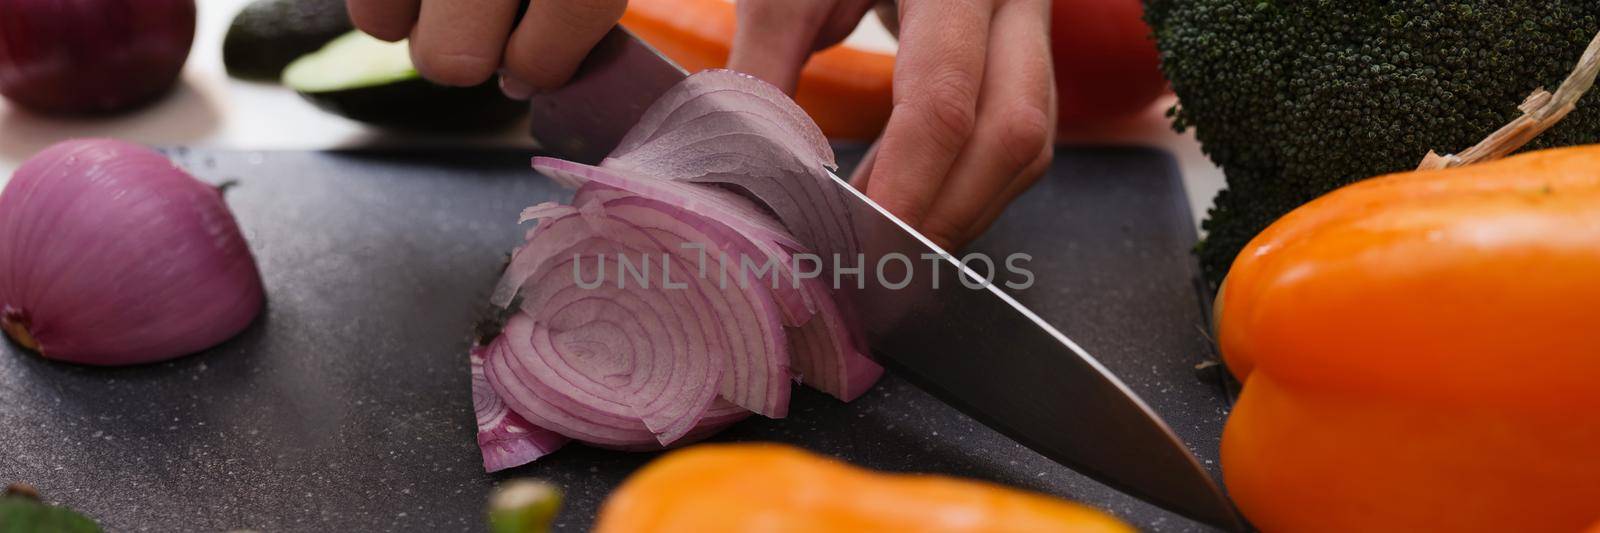 Hands cut onions on a cutting board, organic vegetables close-up. Vegan food preparation, keto diet recipe